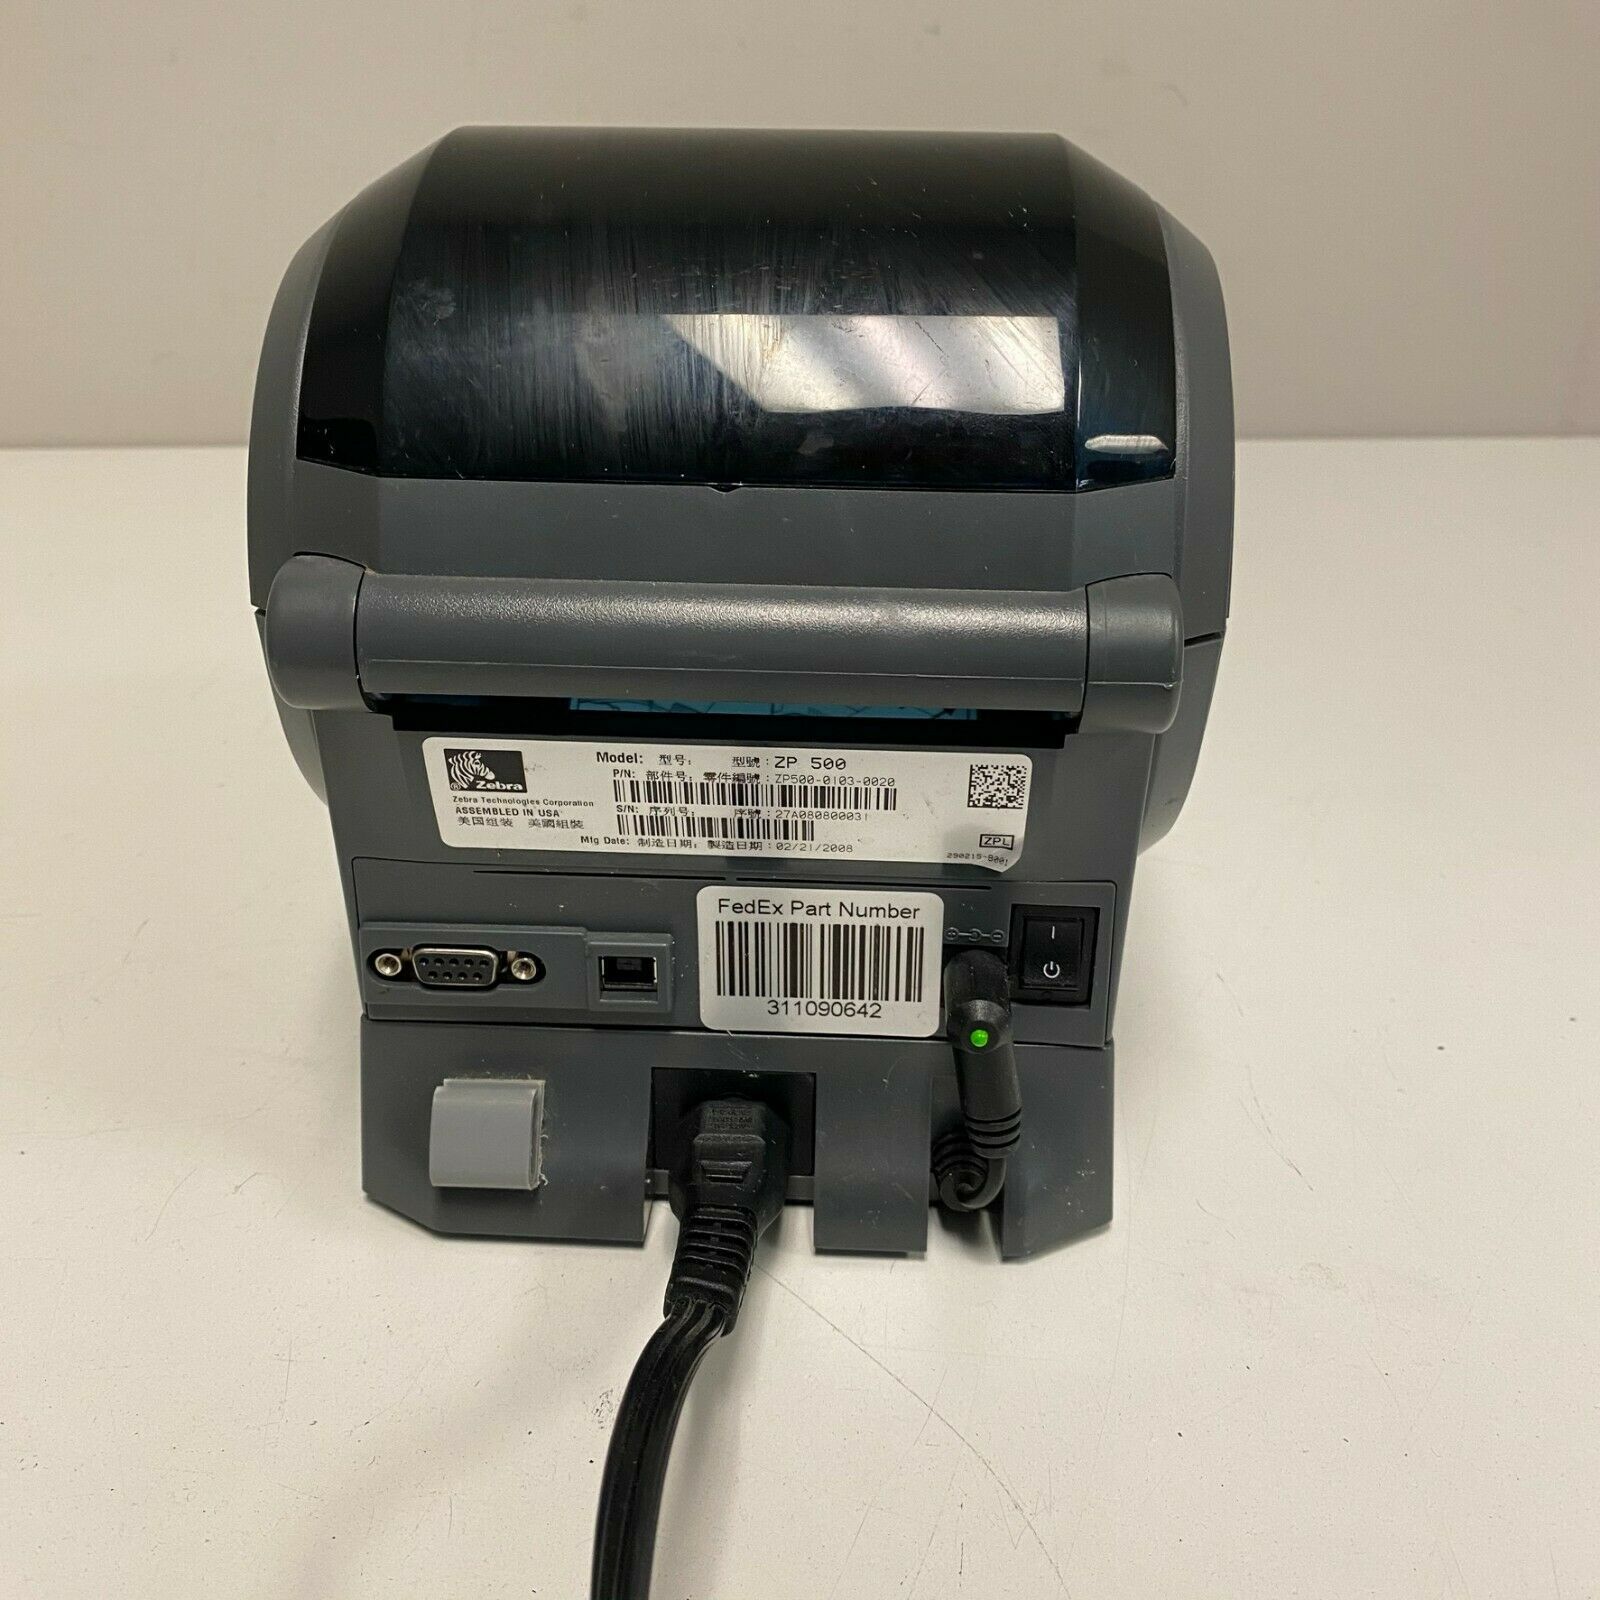 Принтер Zebra ZP500, что пришел на замену Zebra ZP450